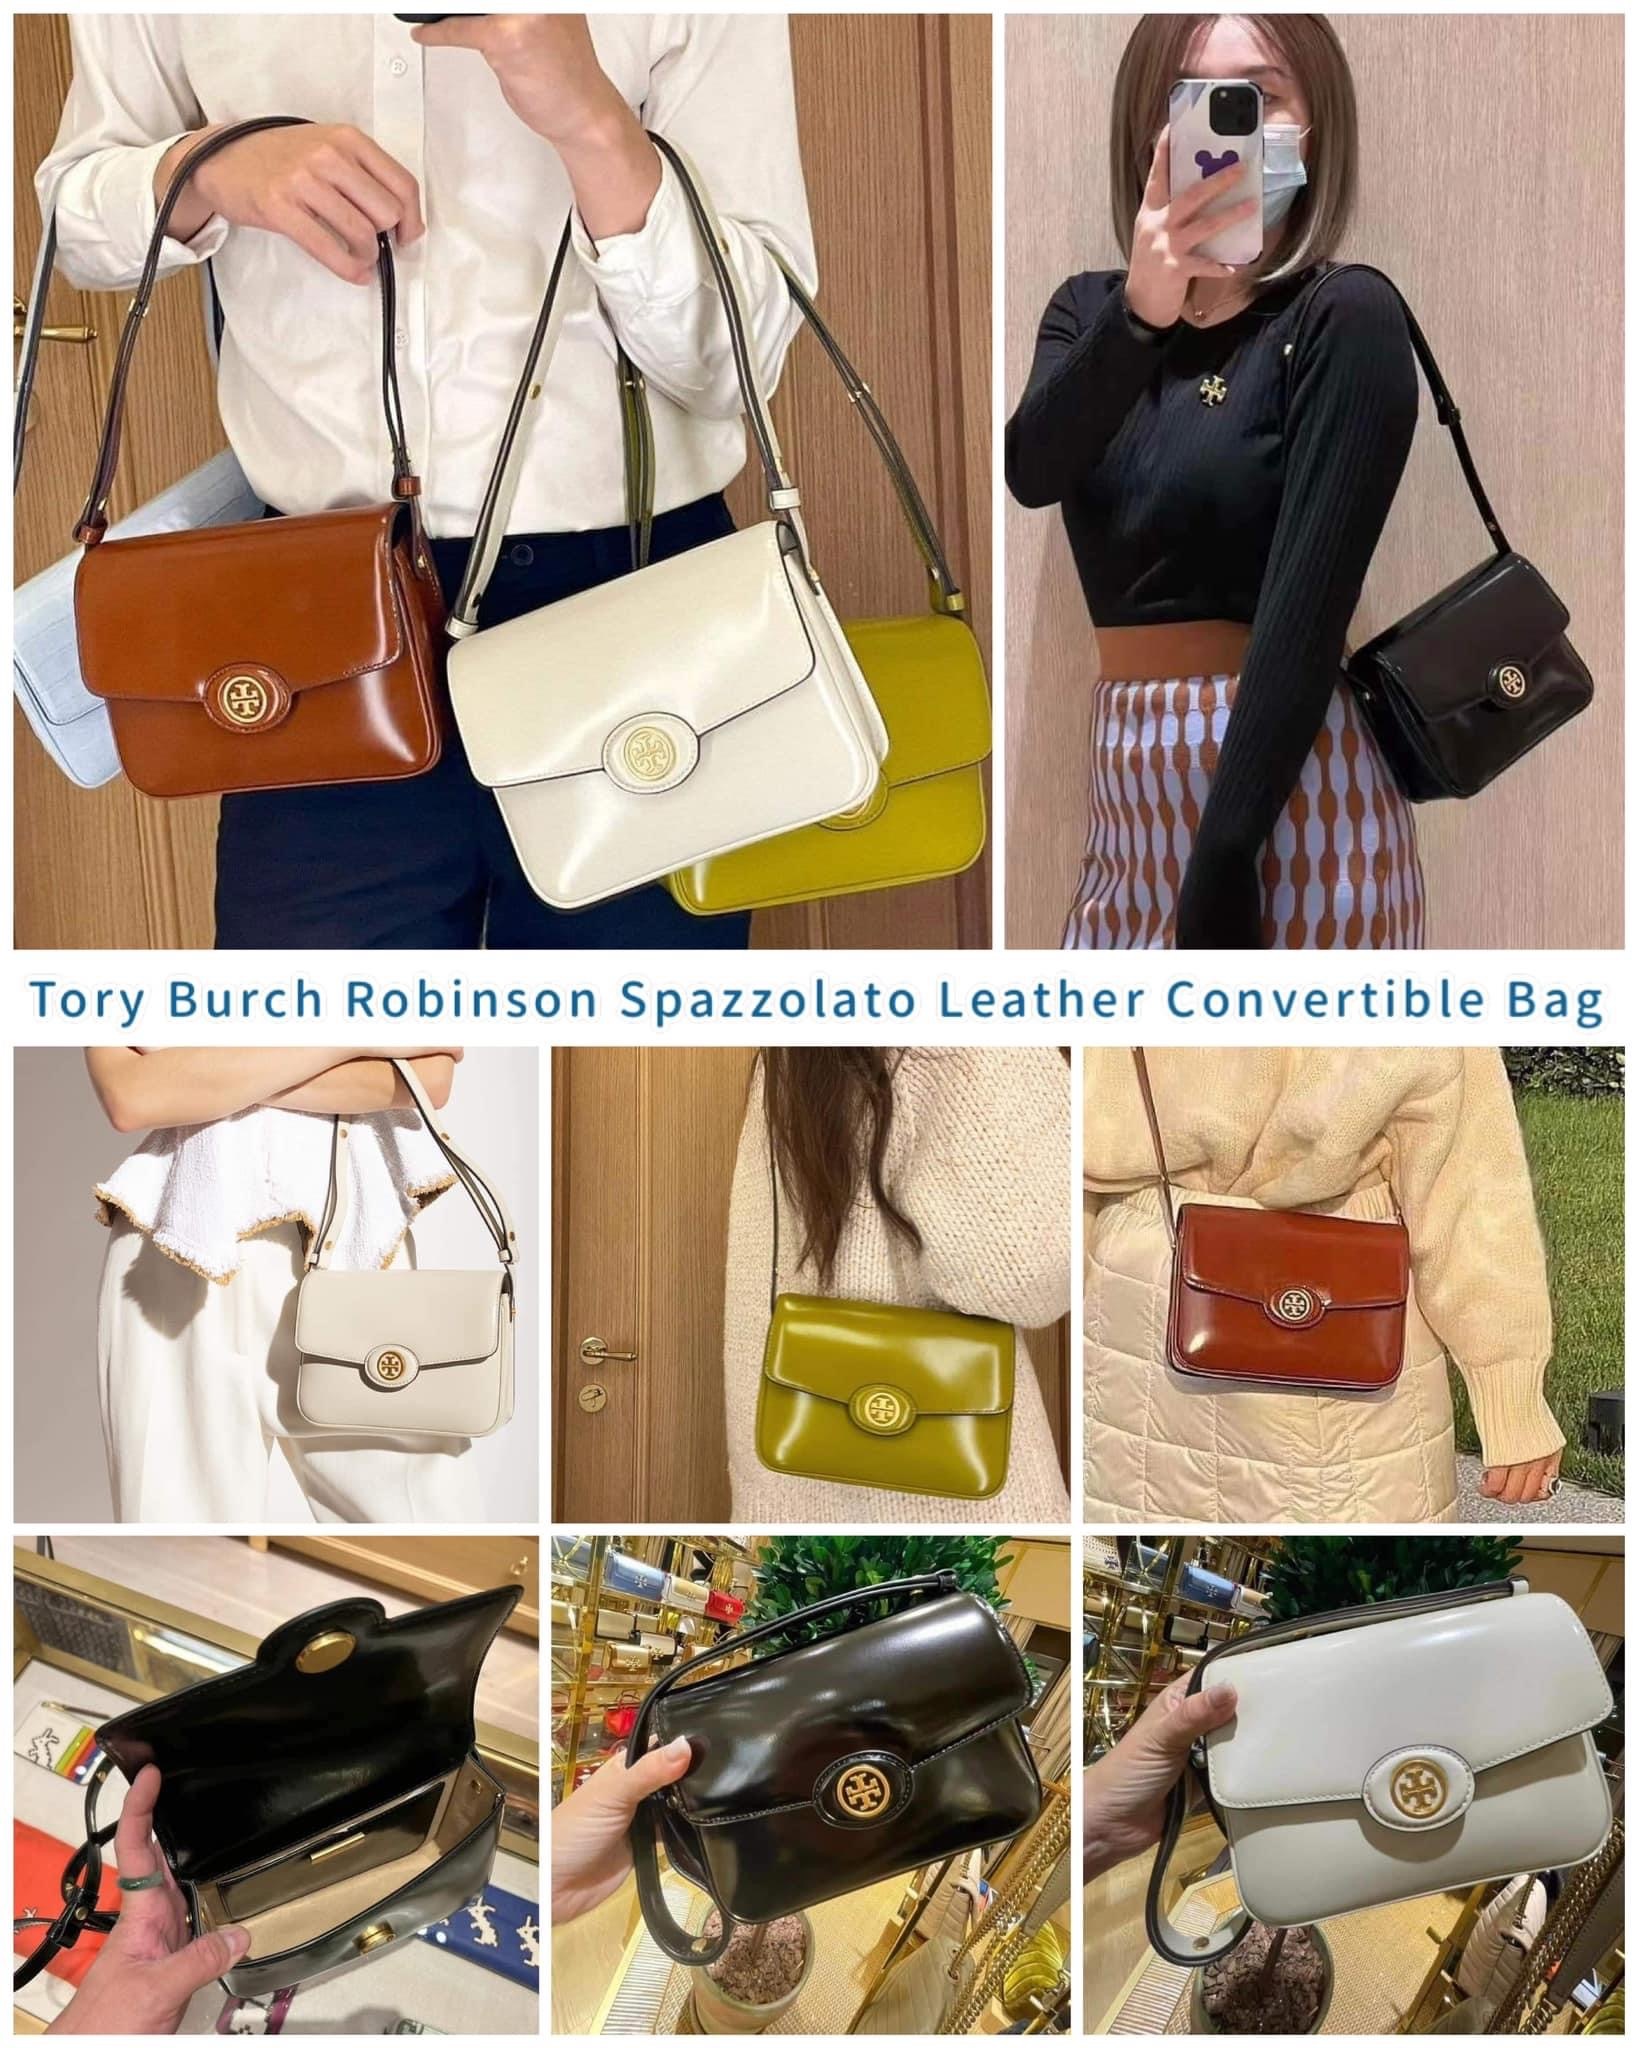 Tory Burch Robinson Spazzolato Leather Convertible Bag